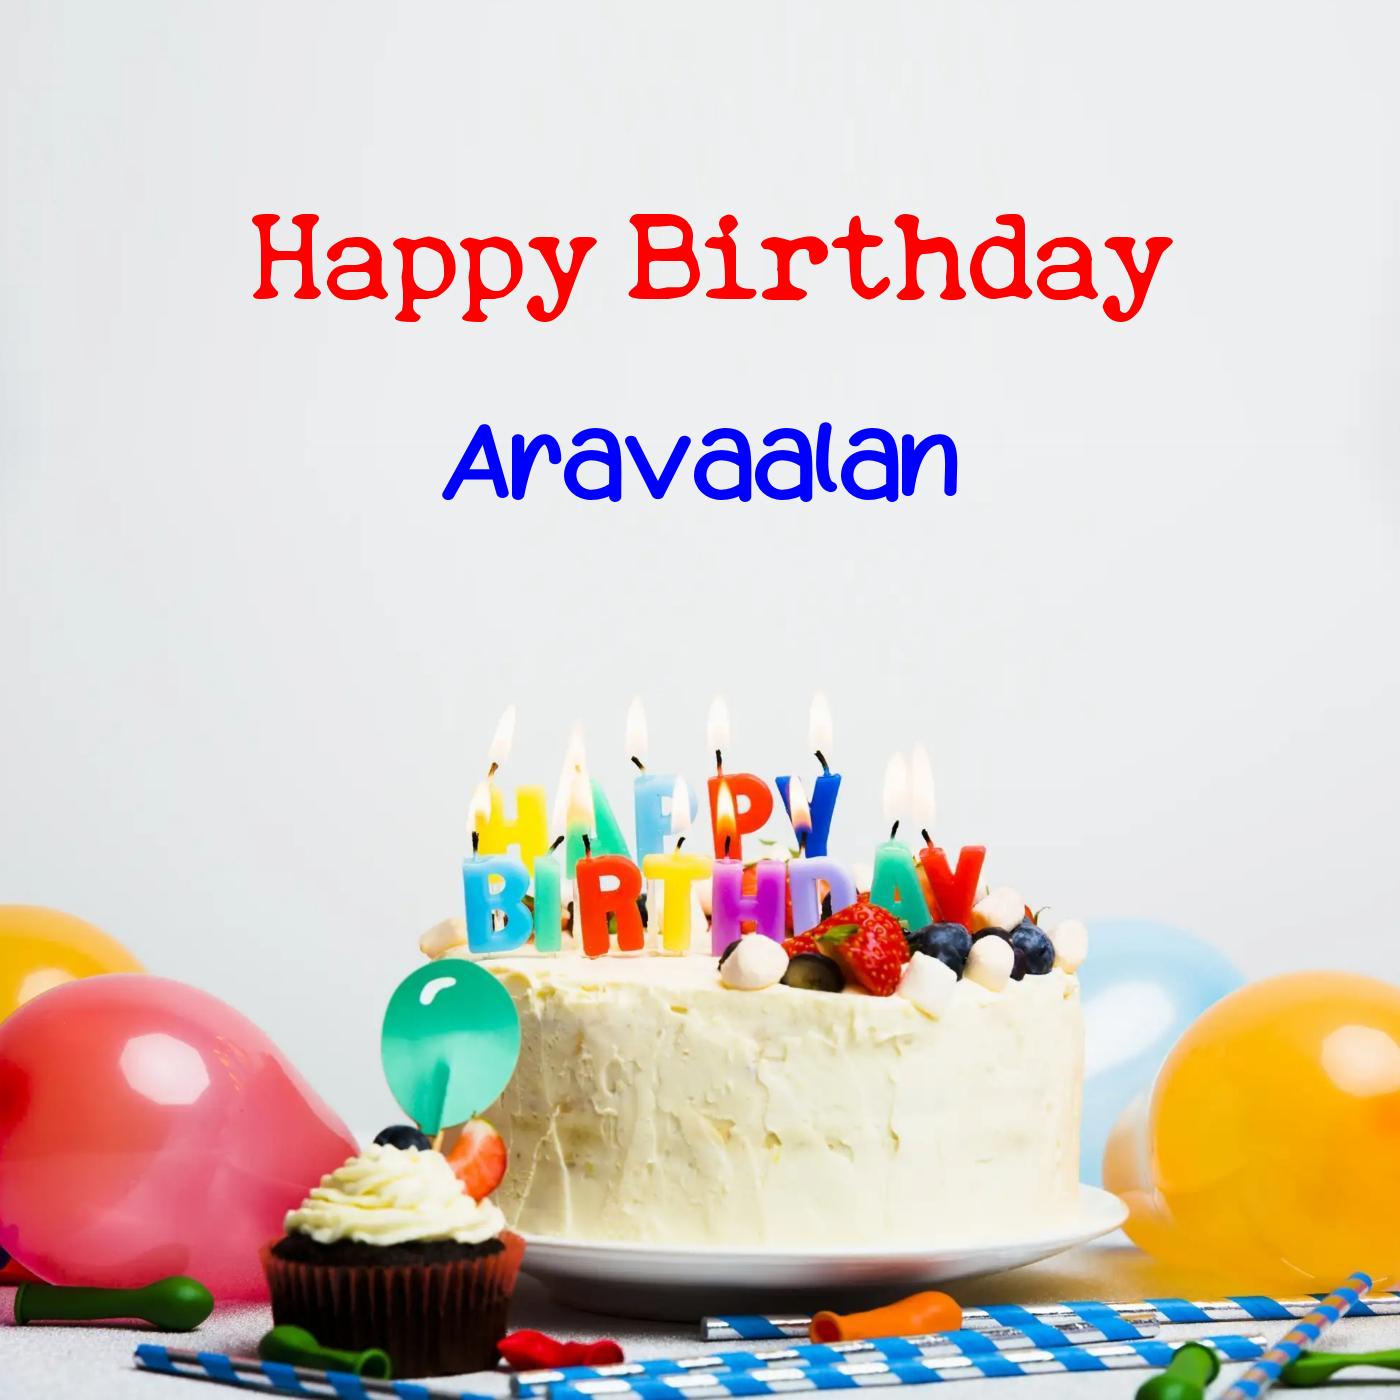 Happy Birthday Aravaalan Cake Balloons Card